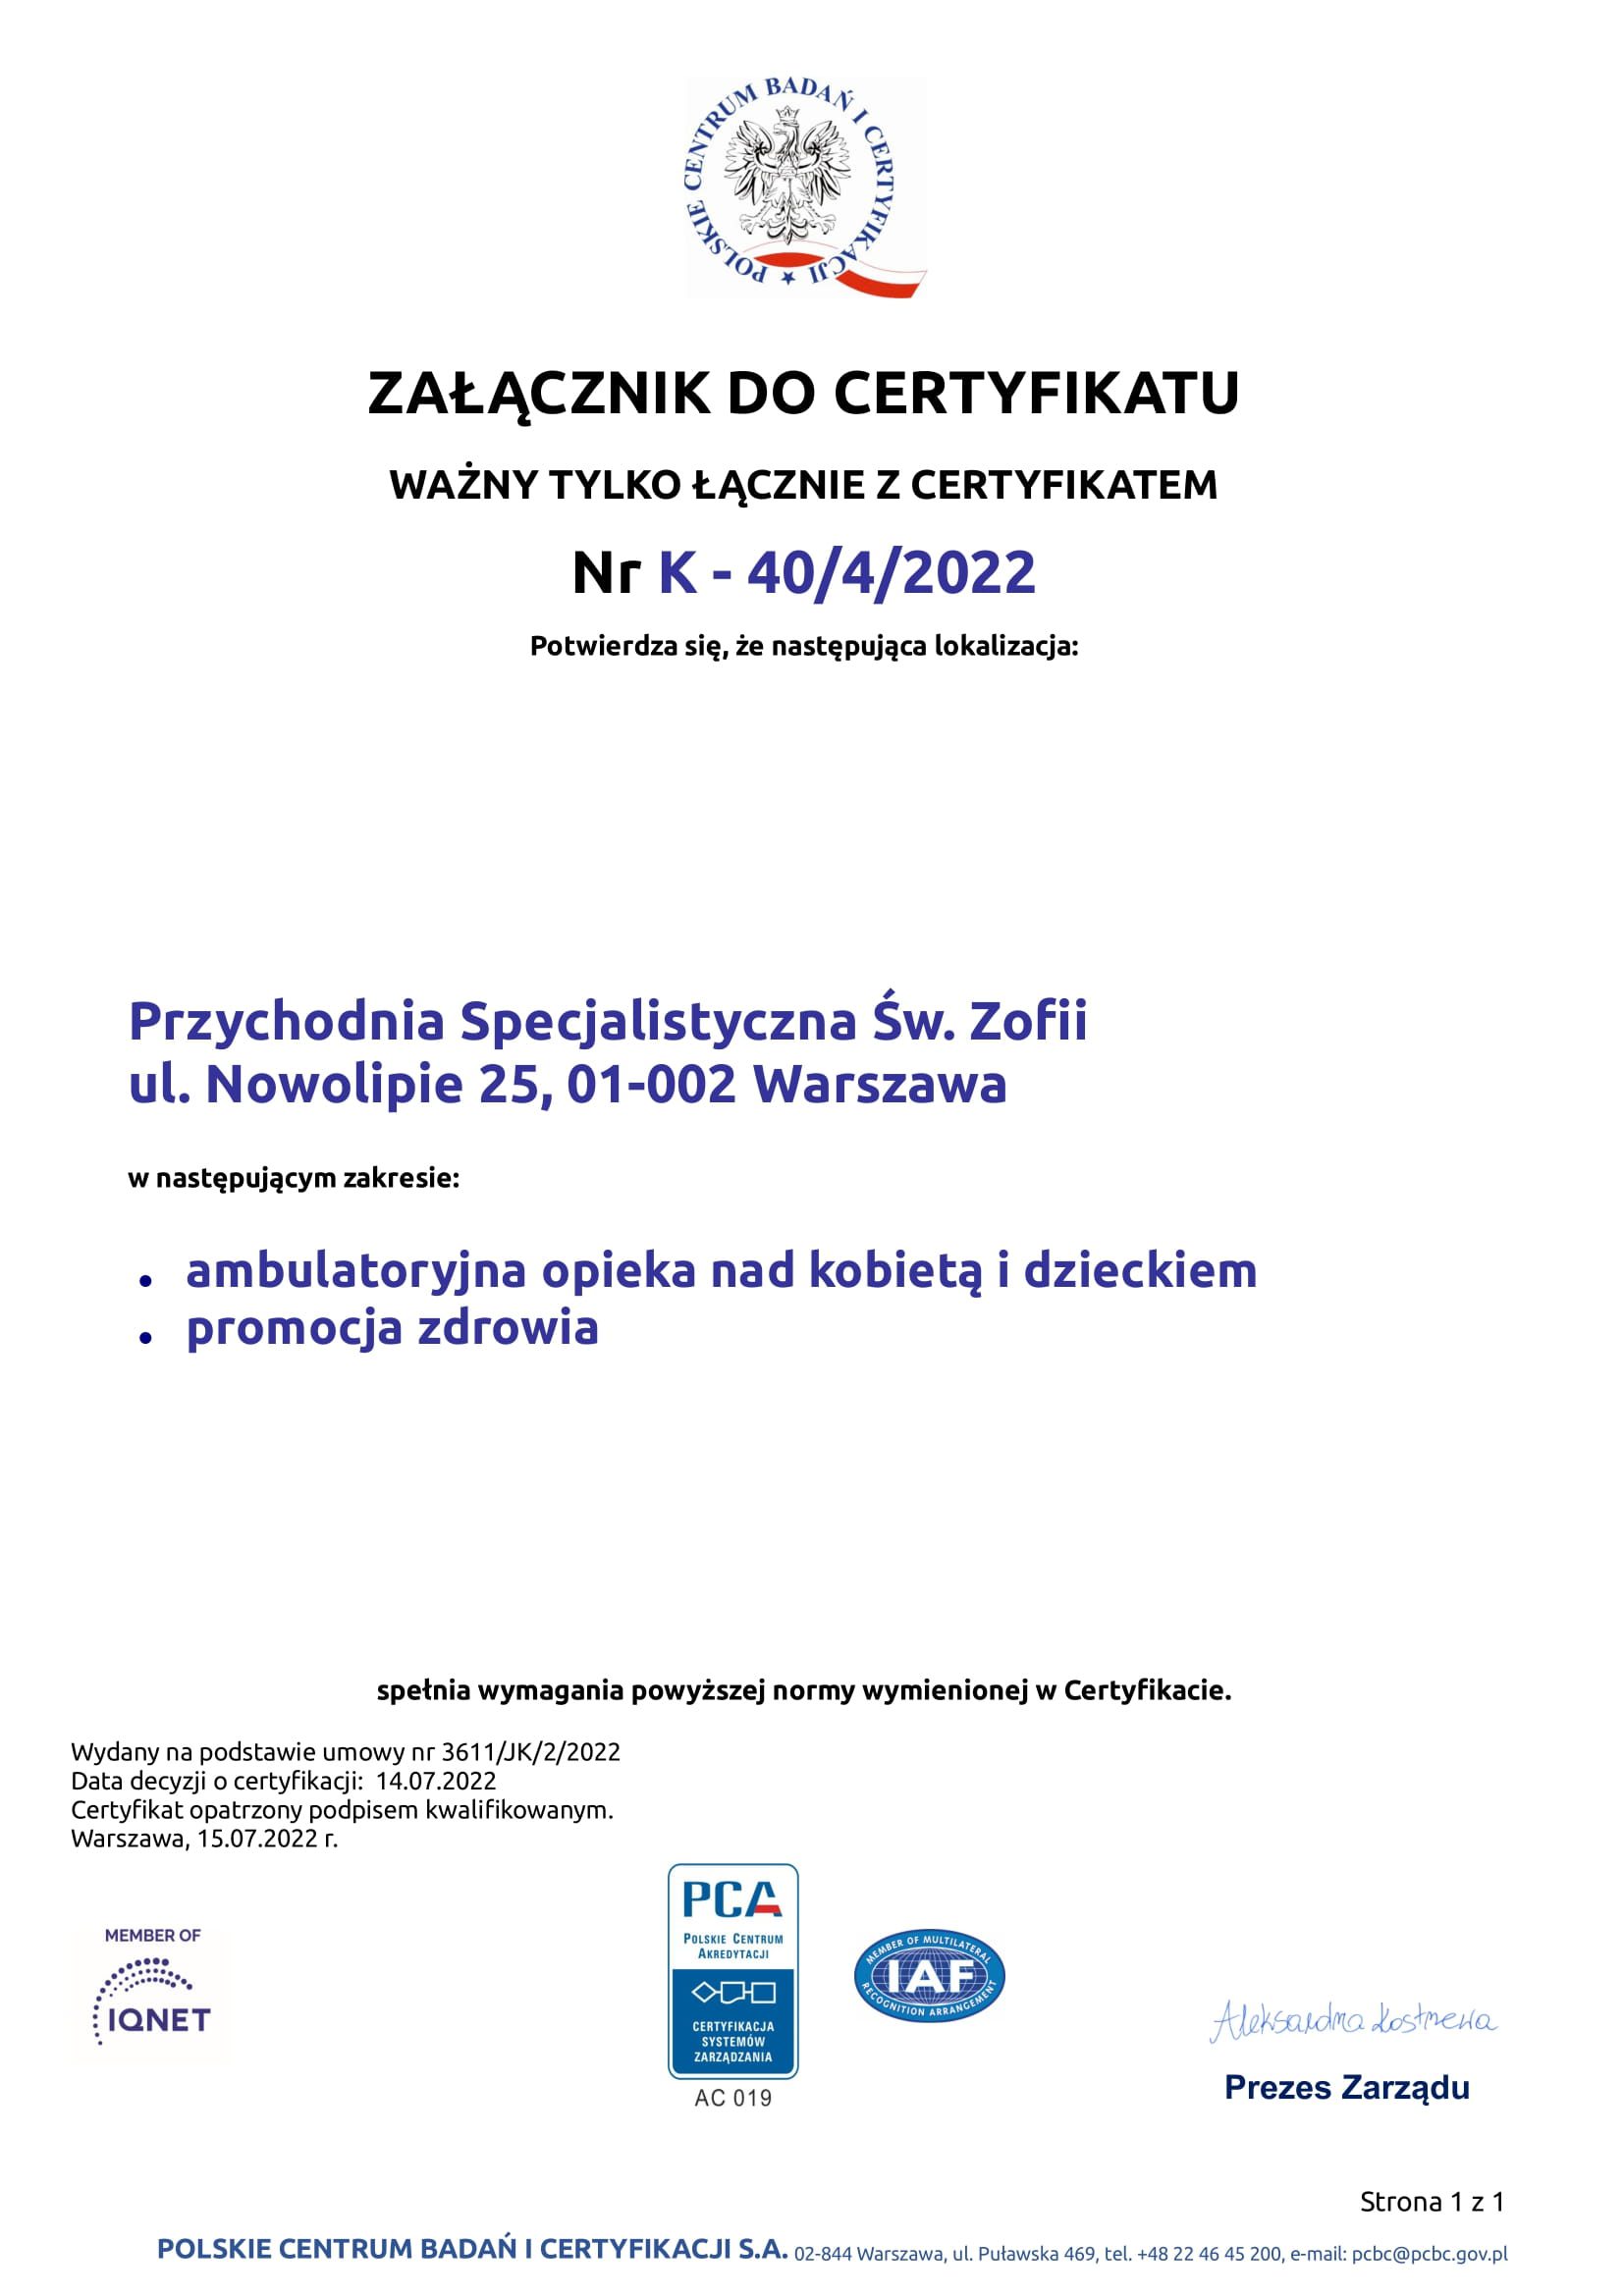 certyfikat 37001 usługi ambulatoryjne